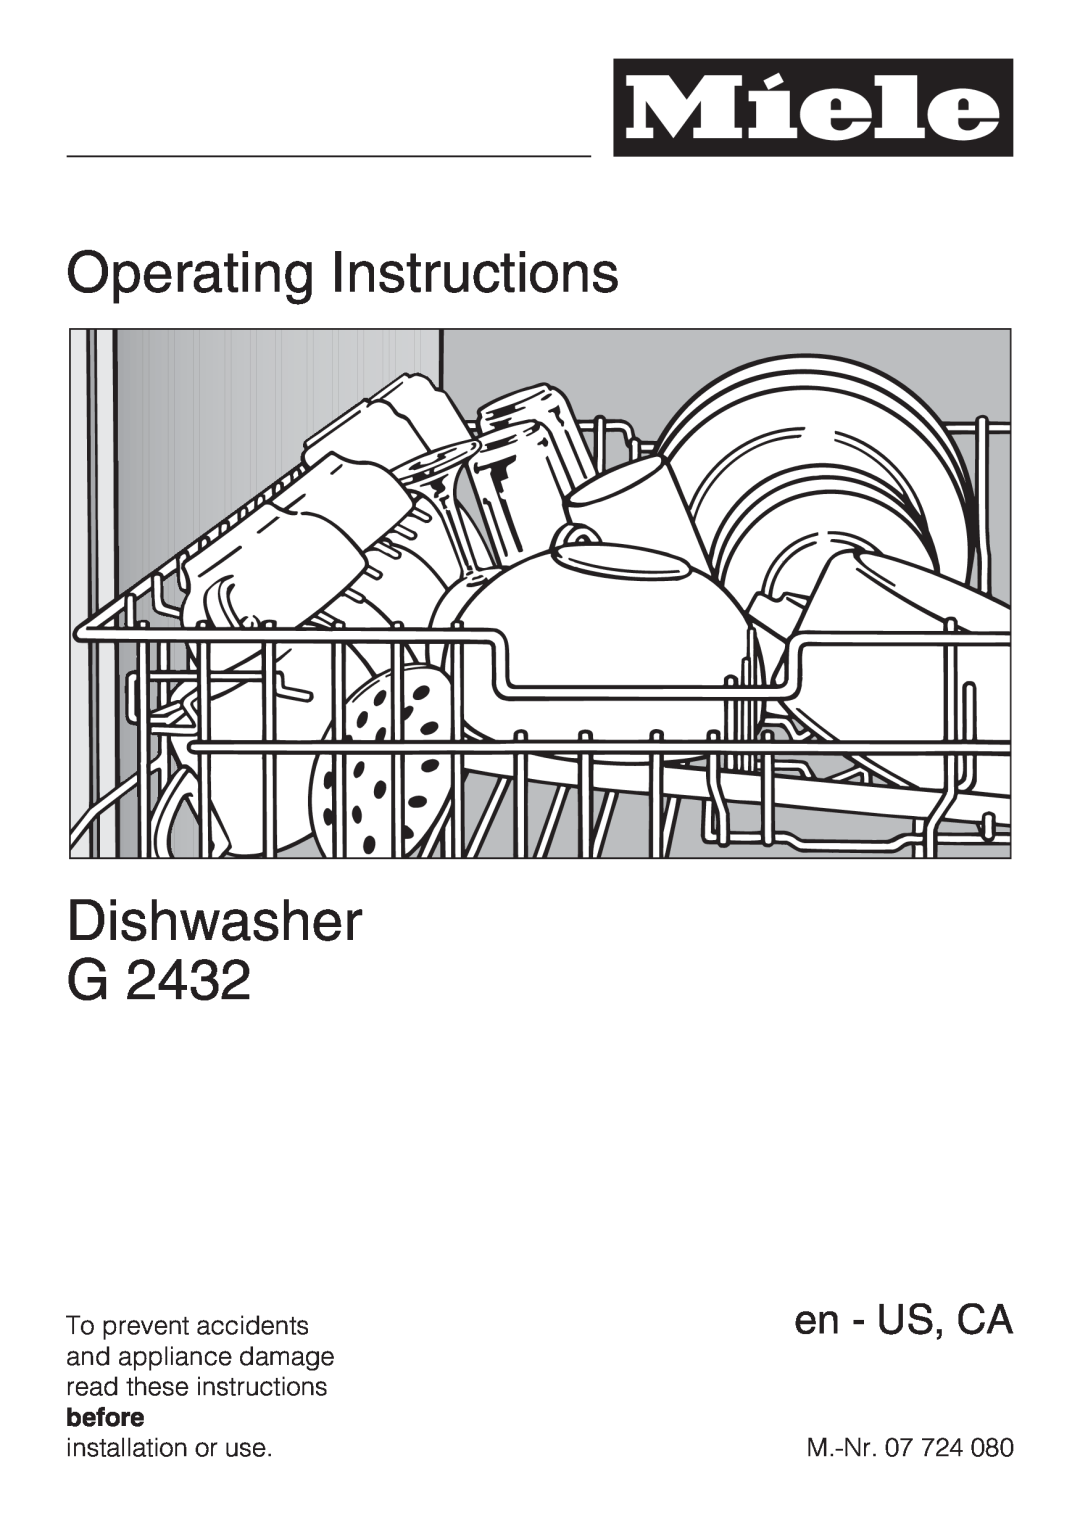 Miele G 2432 manual Operating Instructions, Dishwasher, en - US, CA 